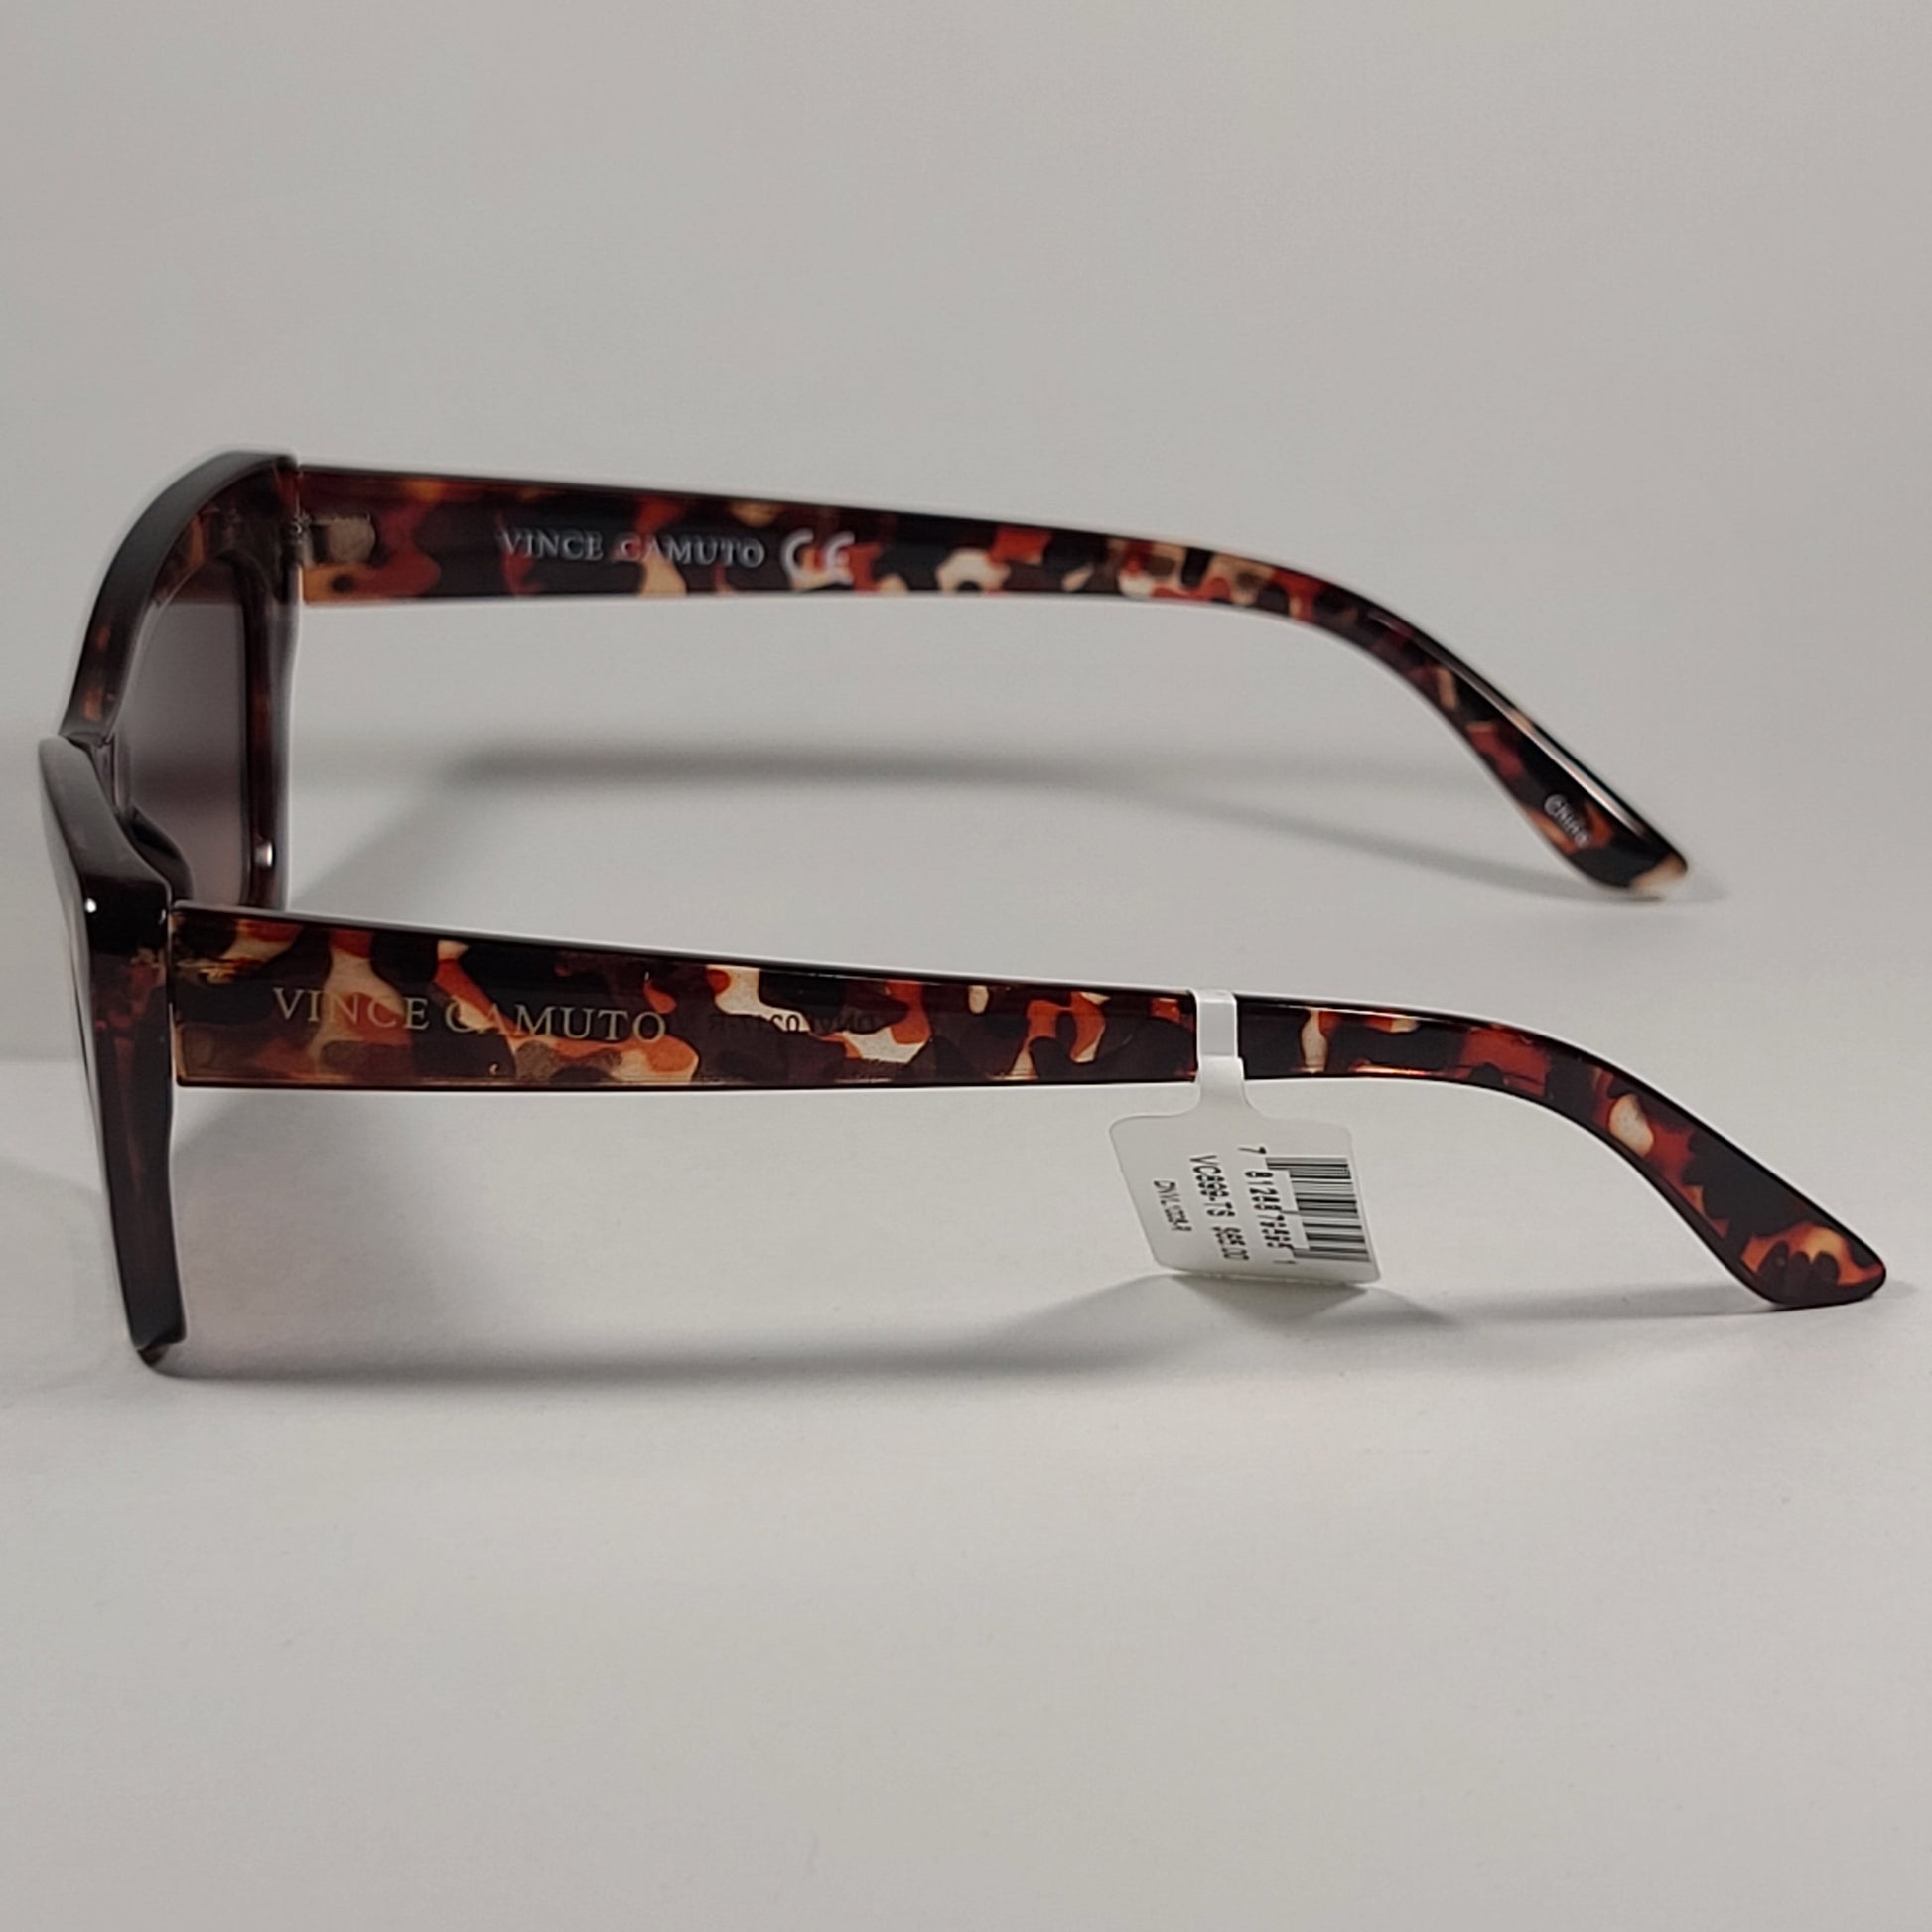 Vince Camuto Cat Eye Sunglasses Tortoise Frame Gold Mirror Lens VC899 TS - Sunglasses